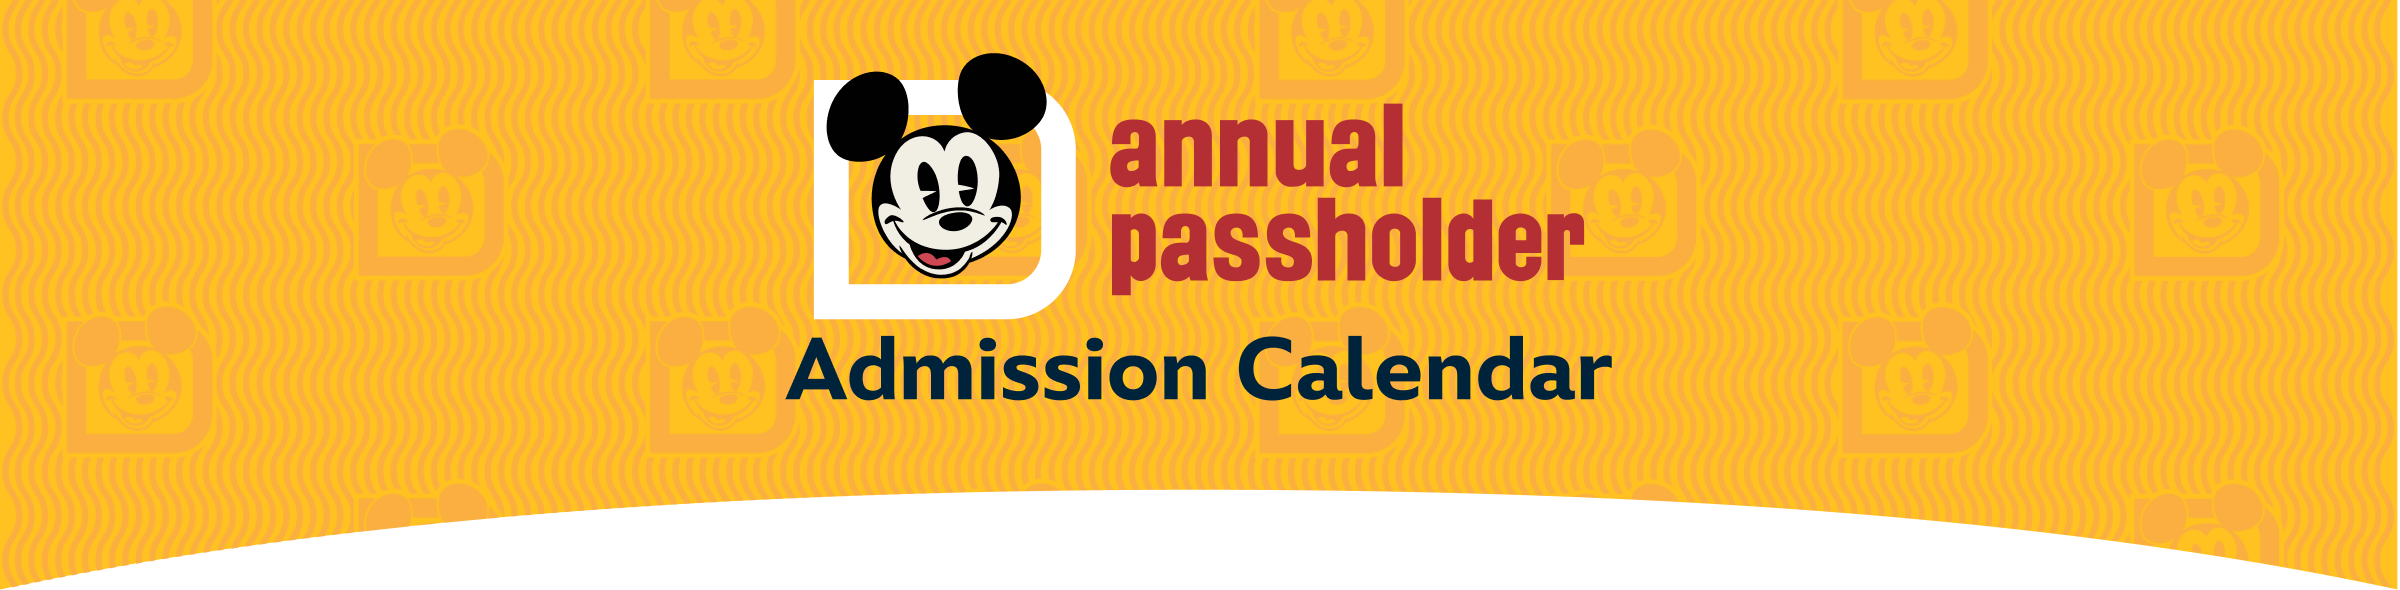 Admissions & Blockout Dates Calendar Incredi